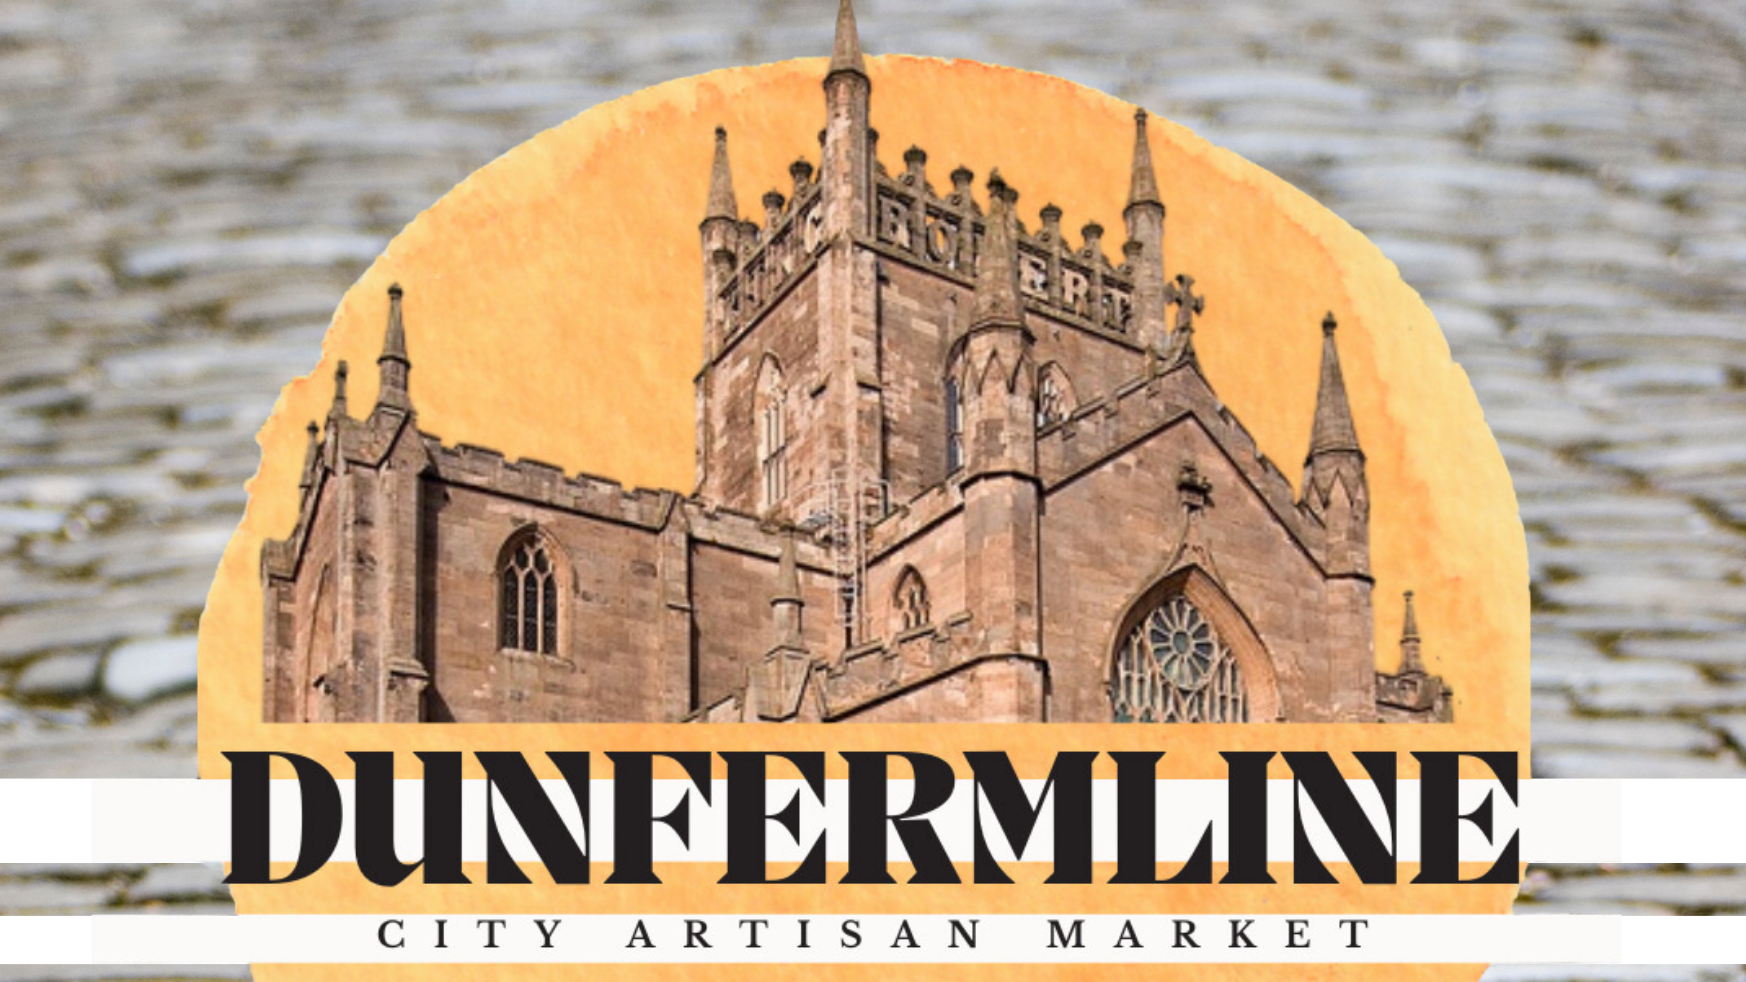 Dunfermline City Artisan Market - June